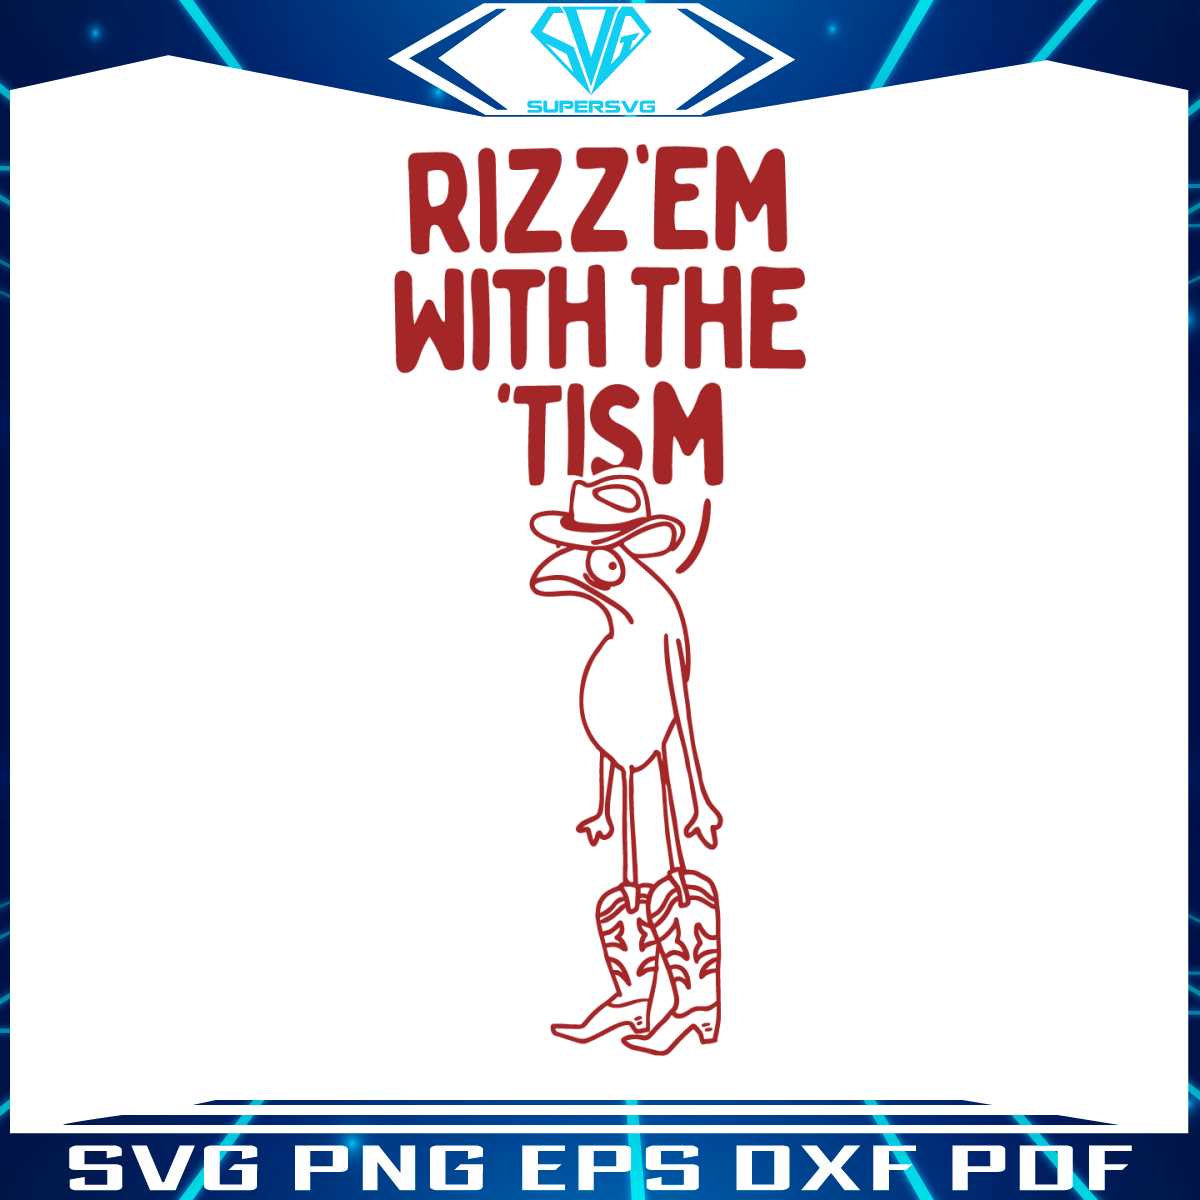 rizz-em-with-the-tism-meme-svg